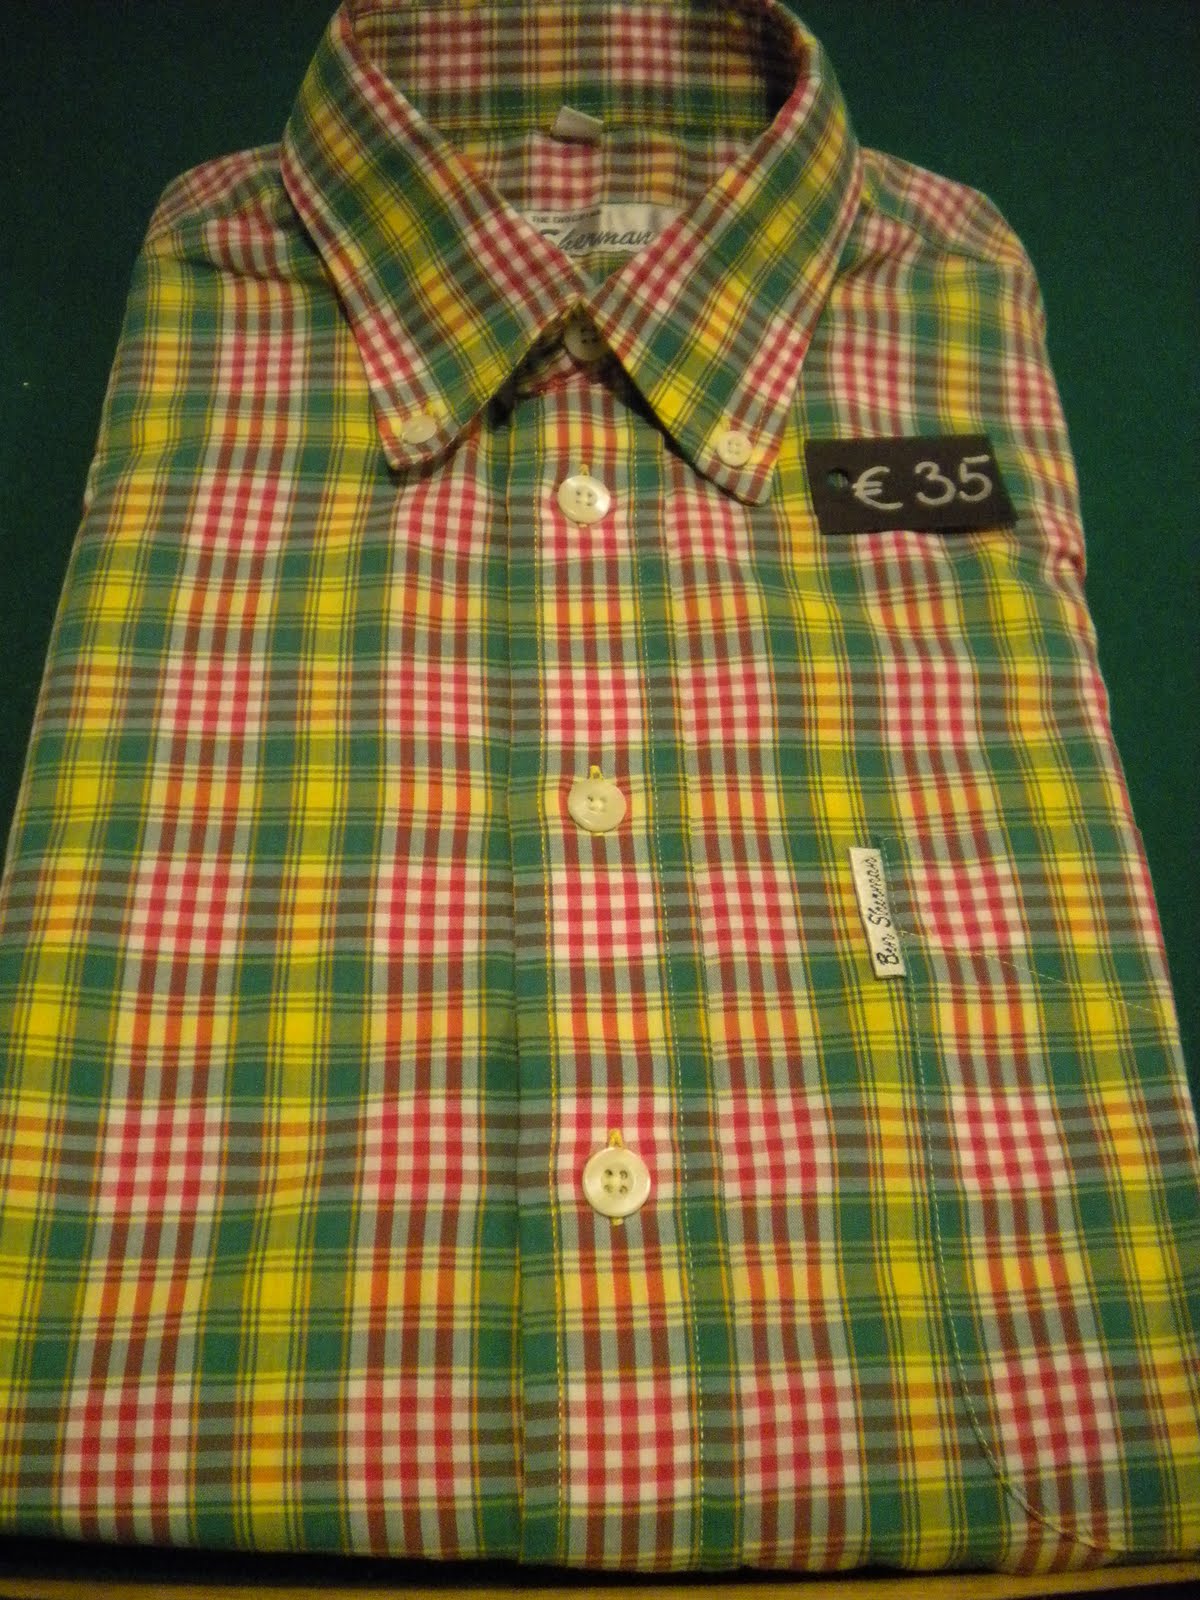 No Bother Records Shop: Vintage Ben Sherman shirt